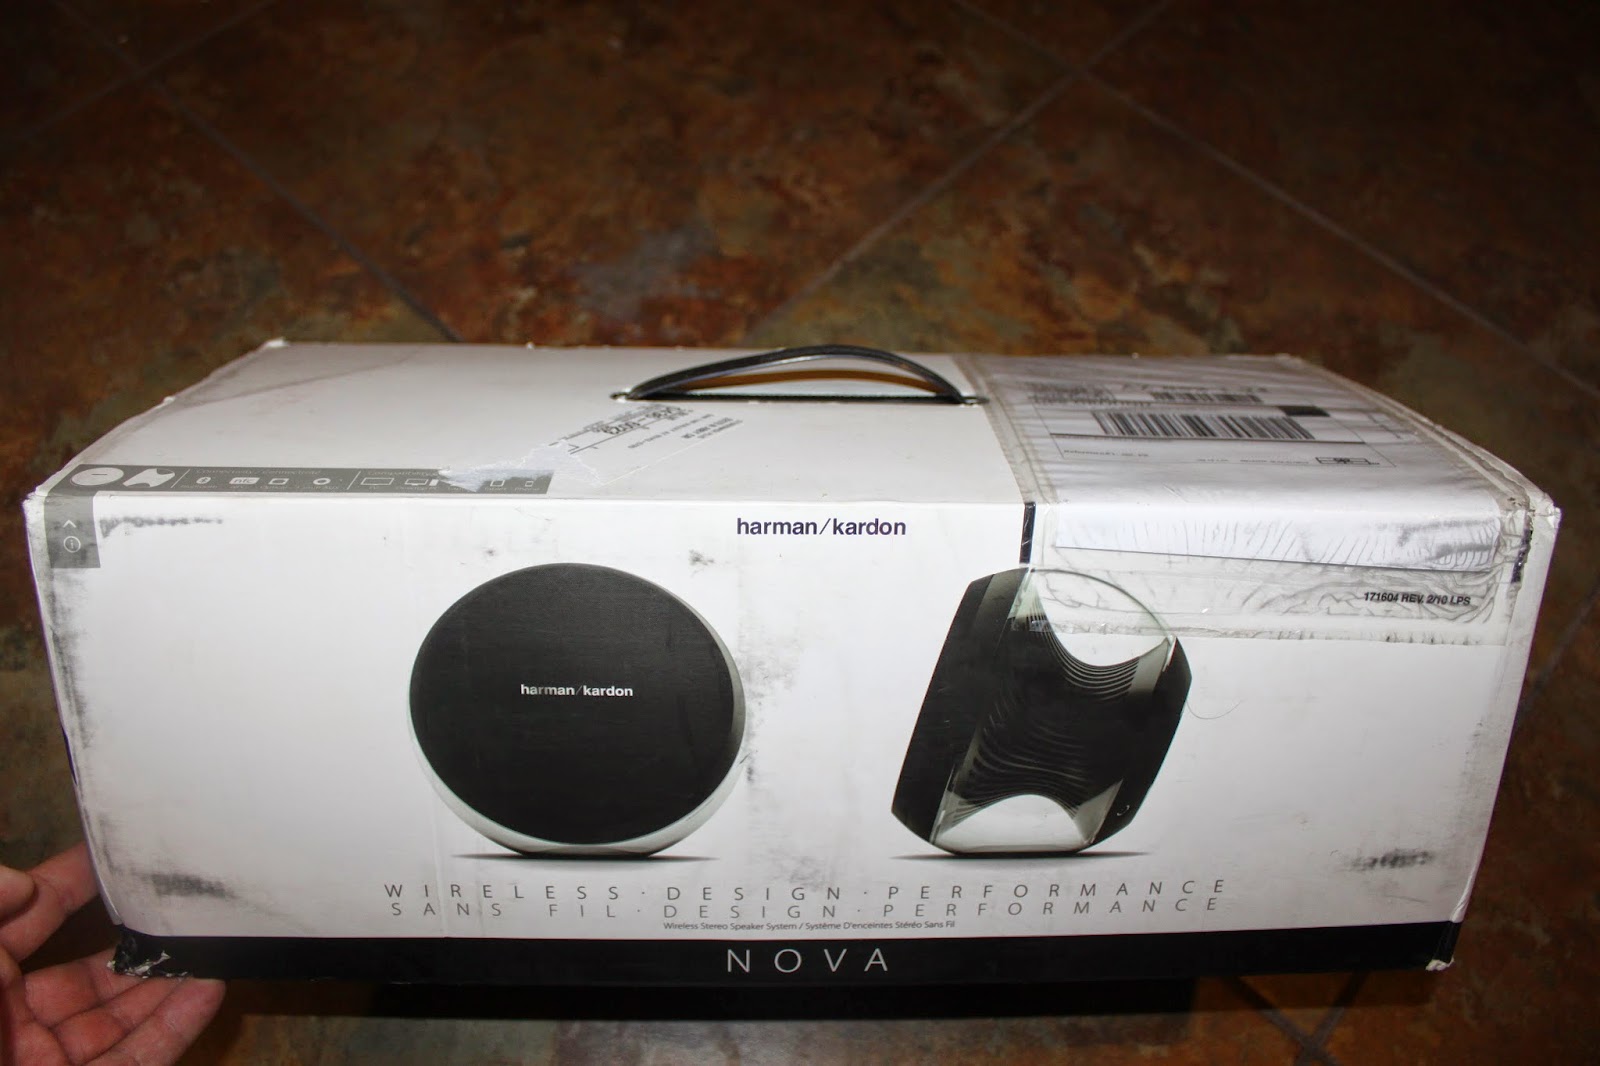 svært udbrud Legende Stereowise Plus: Harman Kardon Nova 2.0 Portable Wireless Speaker System  Review